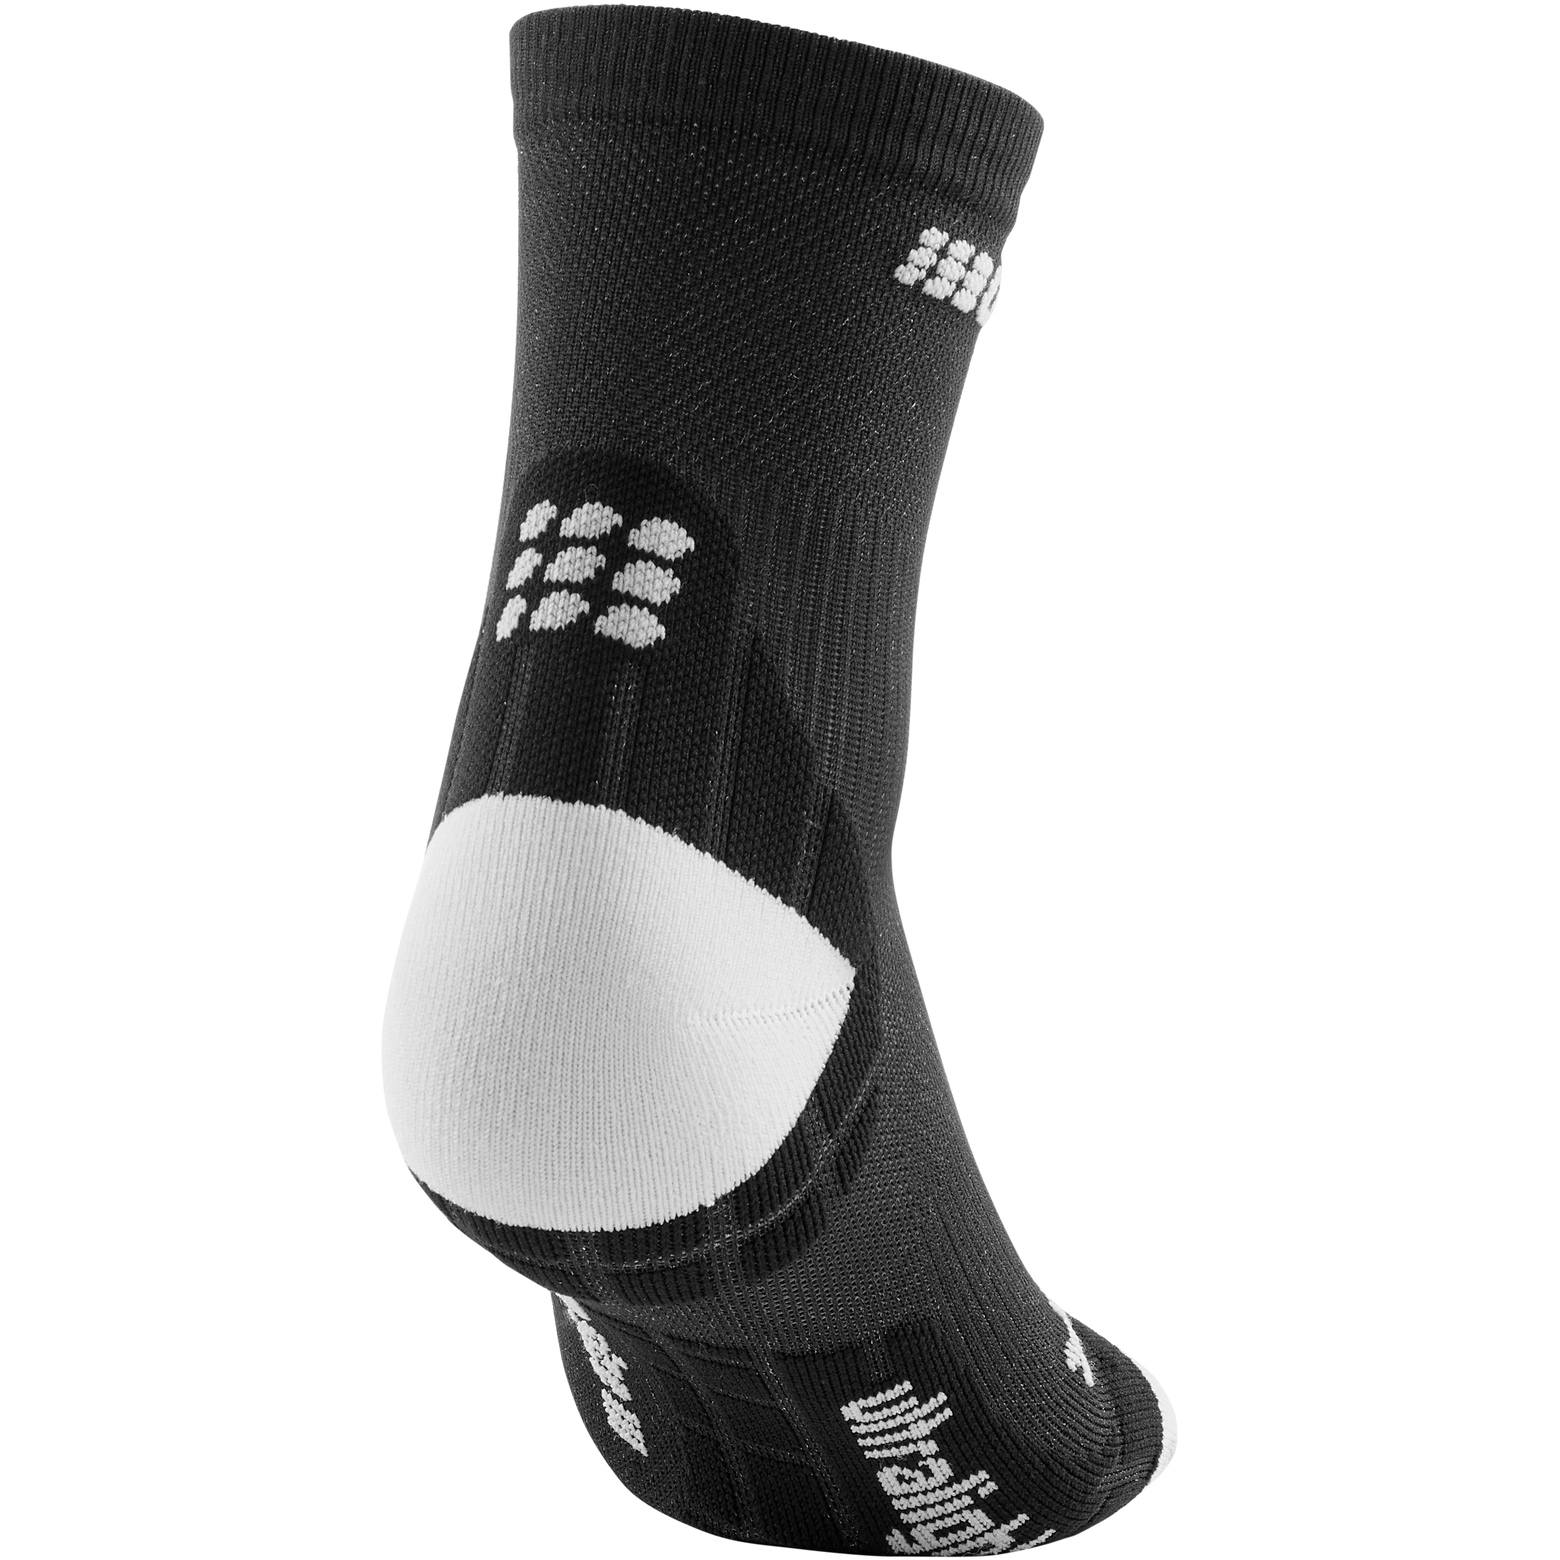 Run Ultralight Compression Socks for men